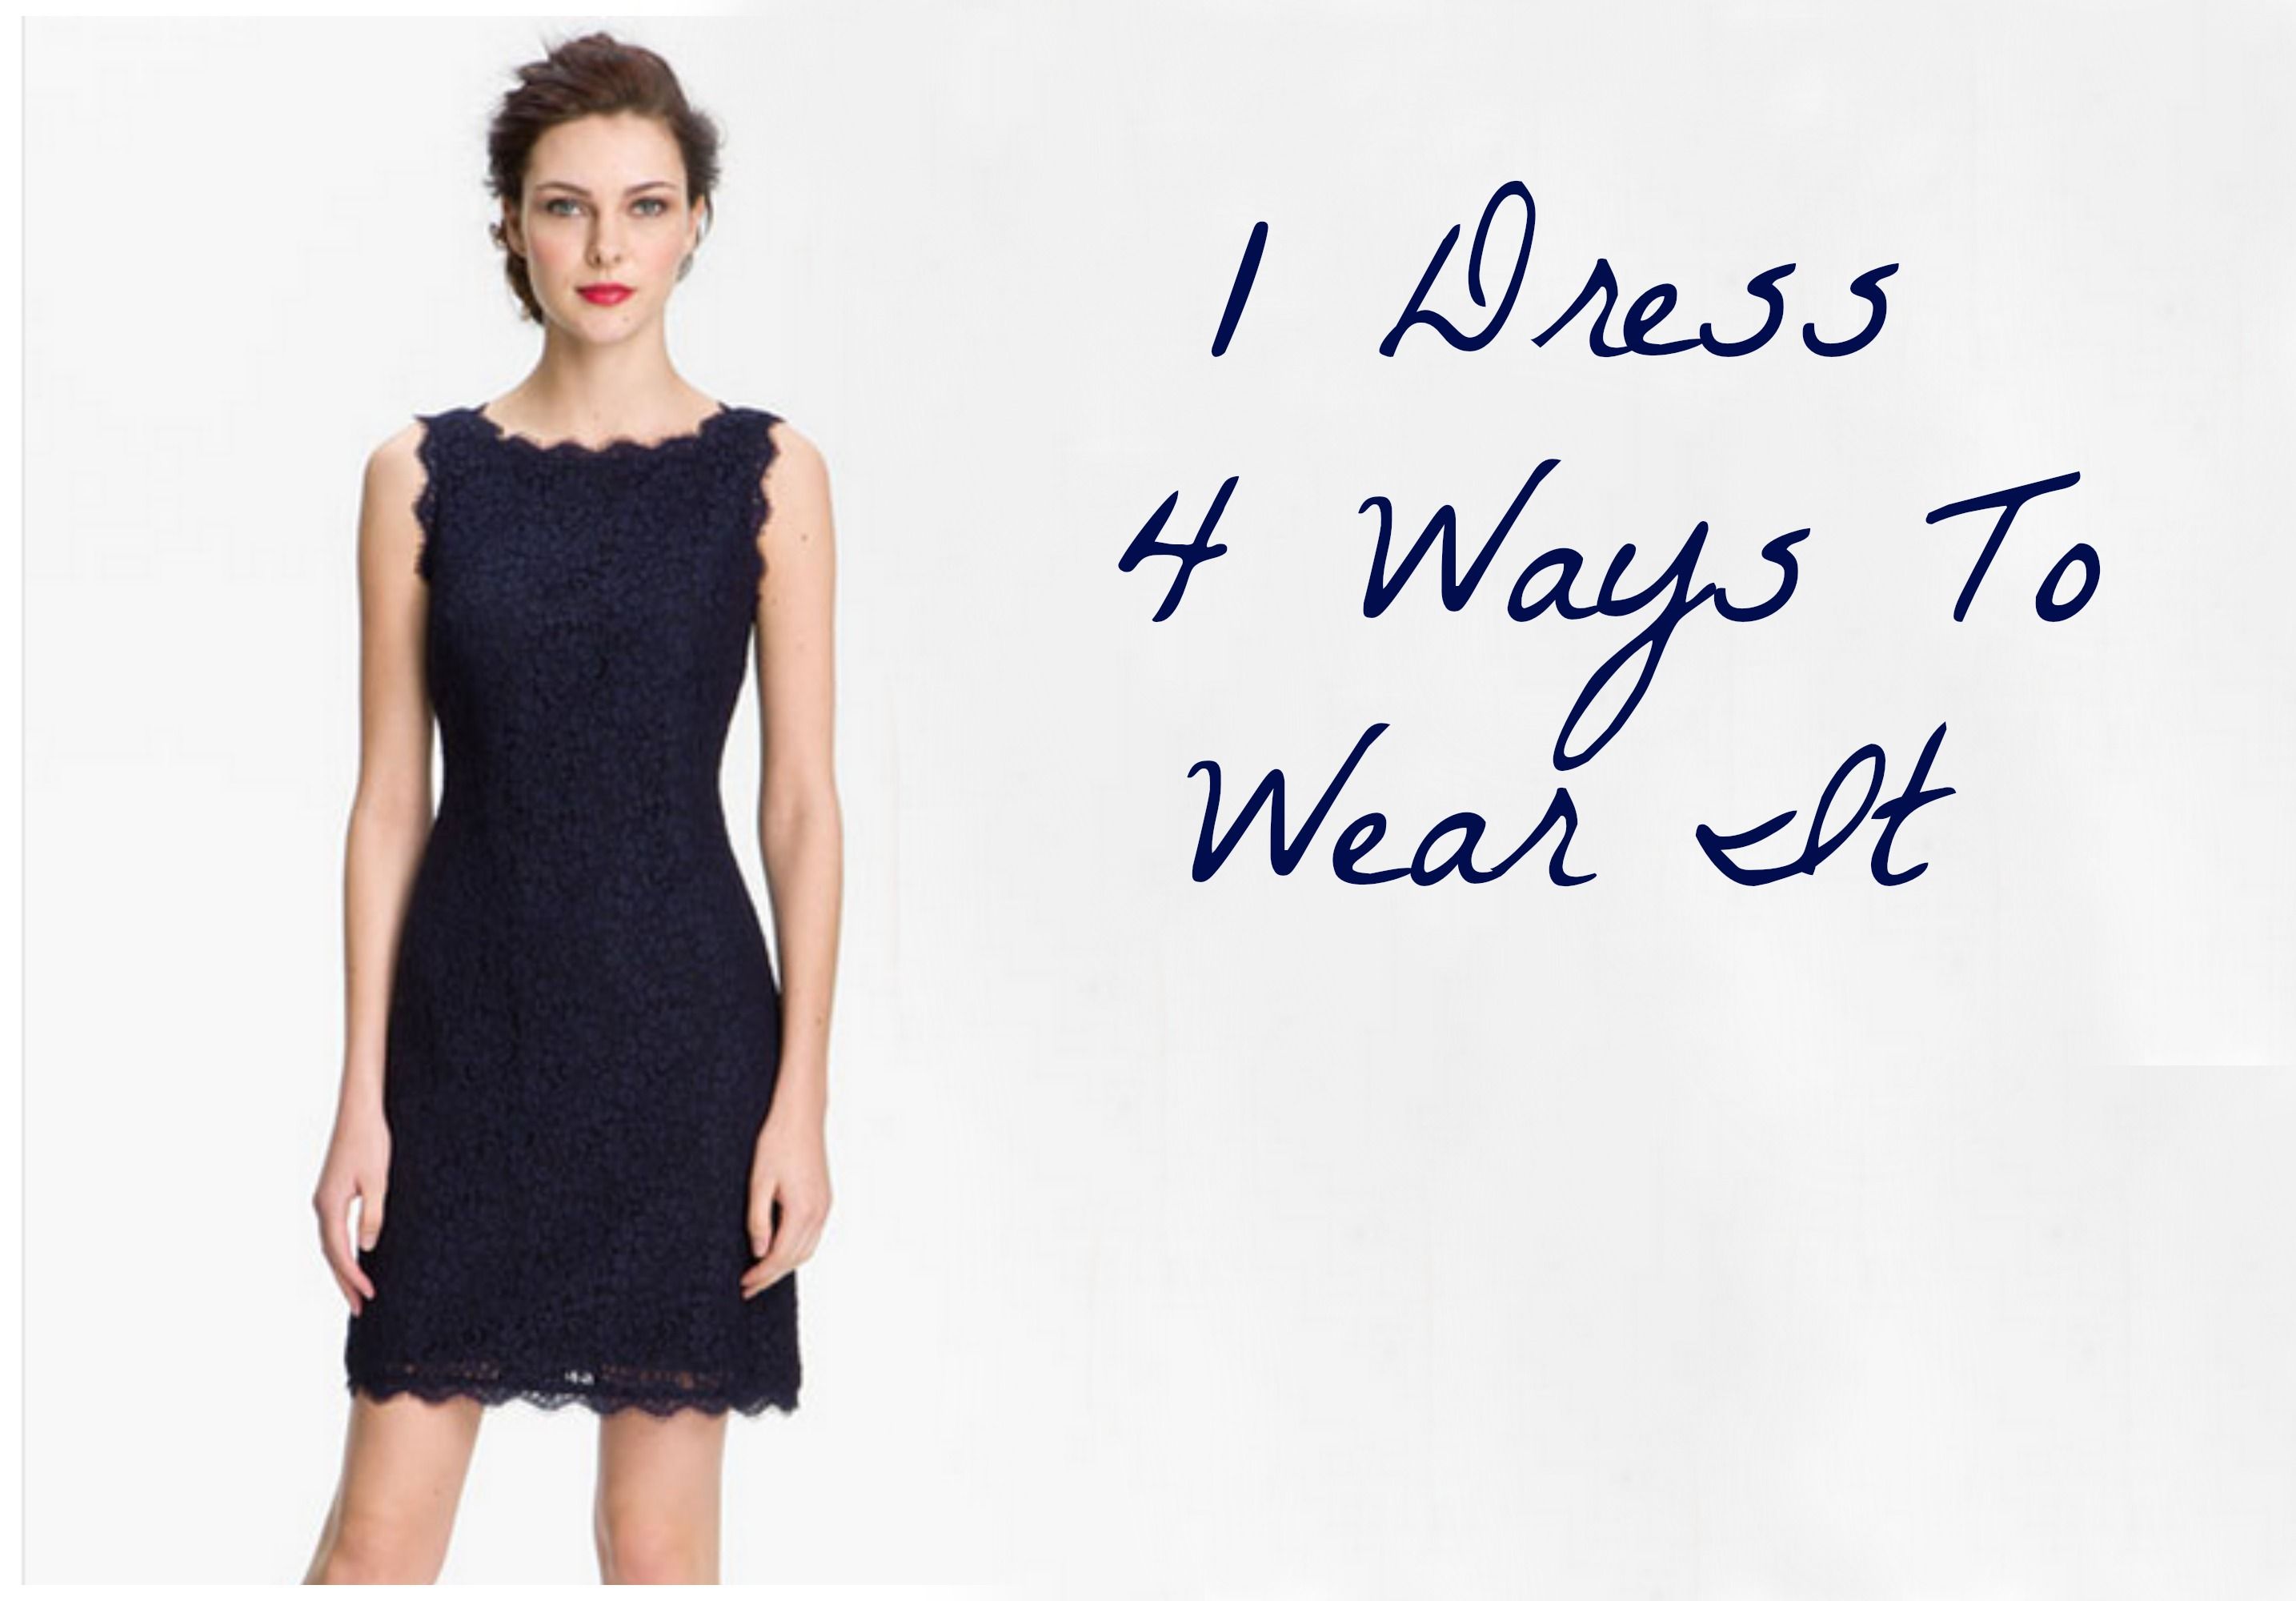 4 Ways to wear a bridesmaid dress